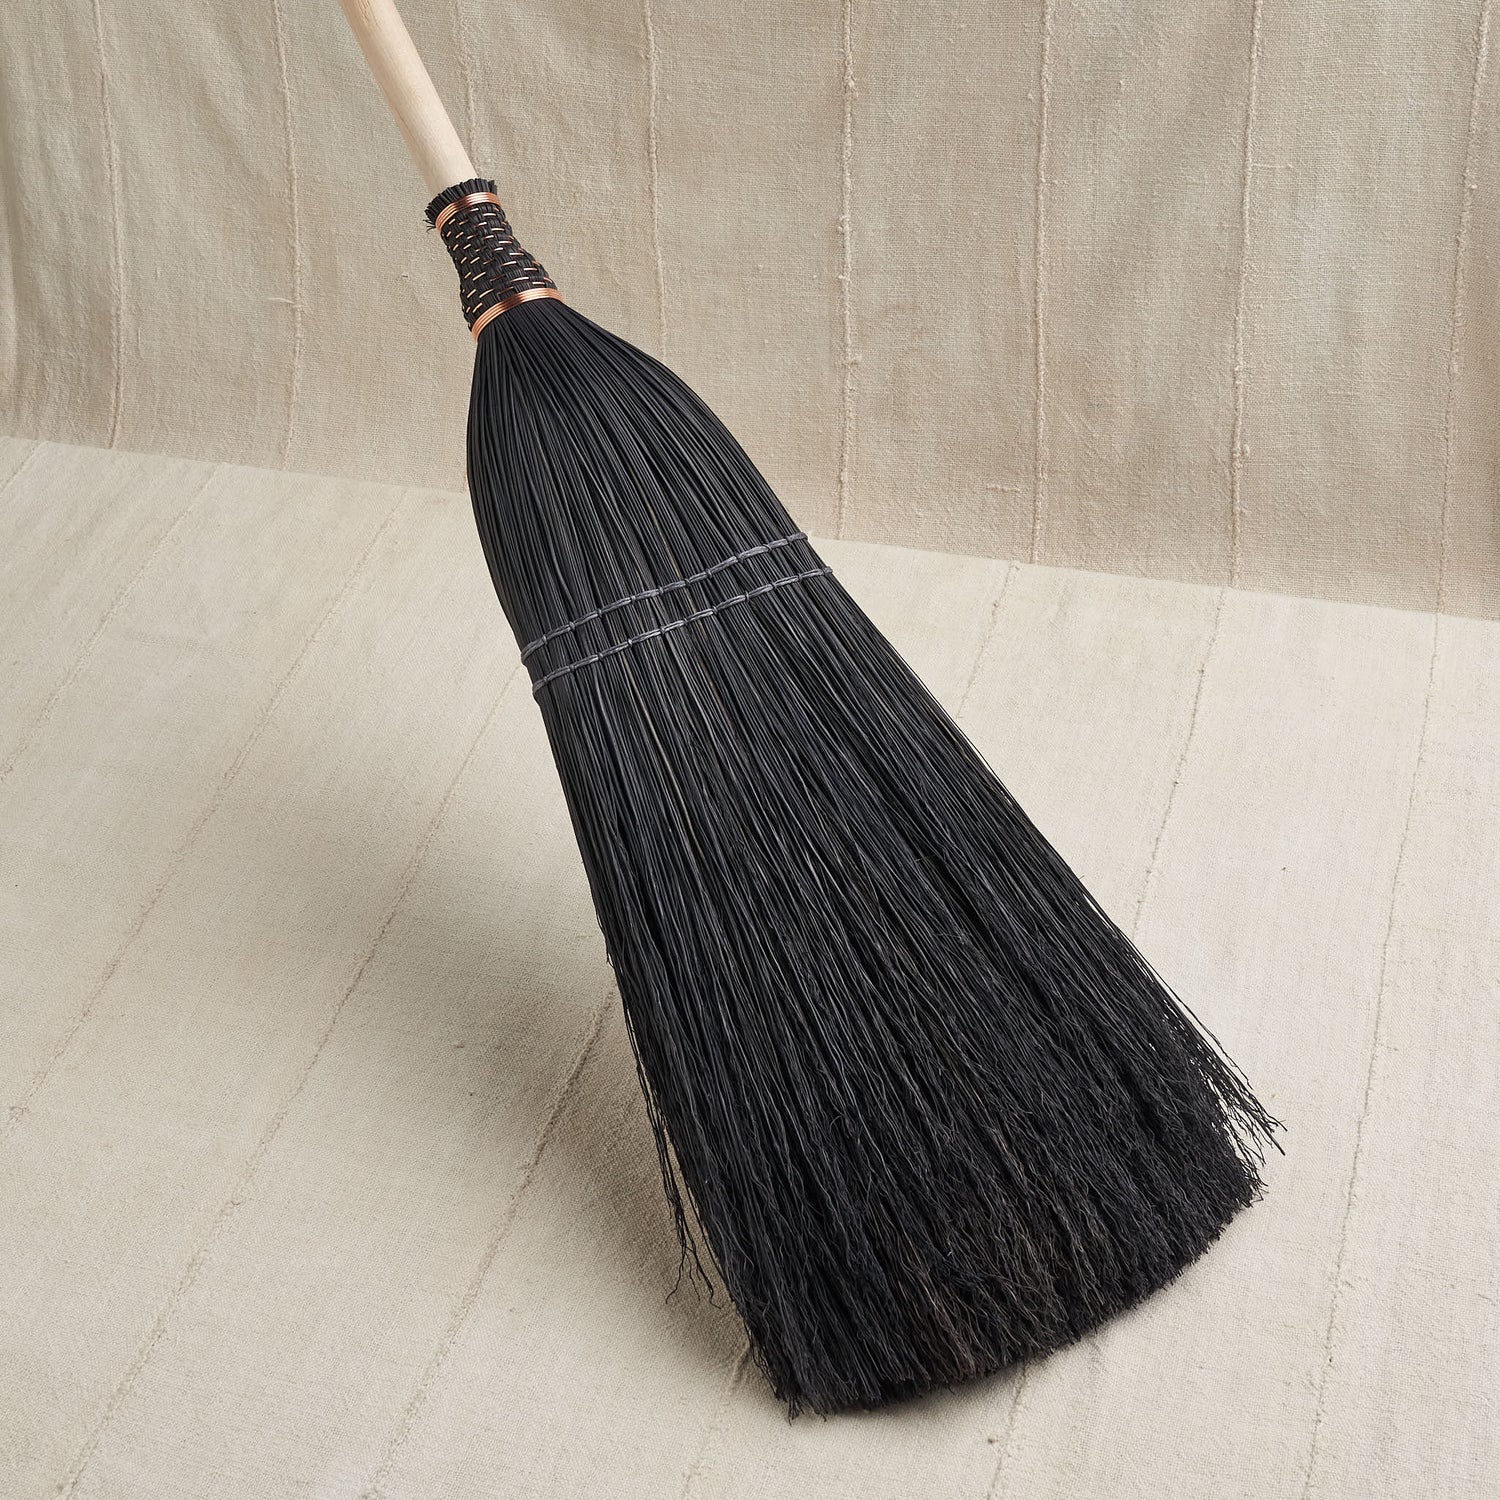 Shaker Broom, Iron Black Bristle